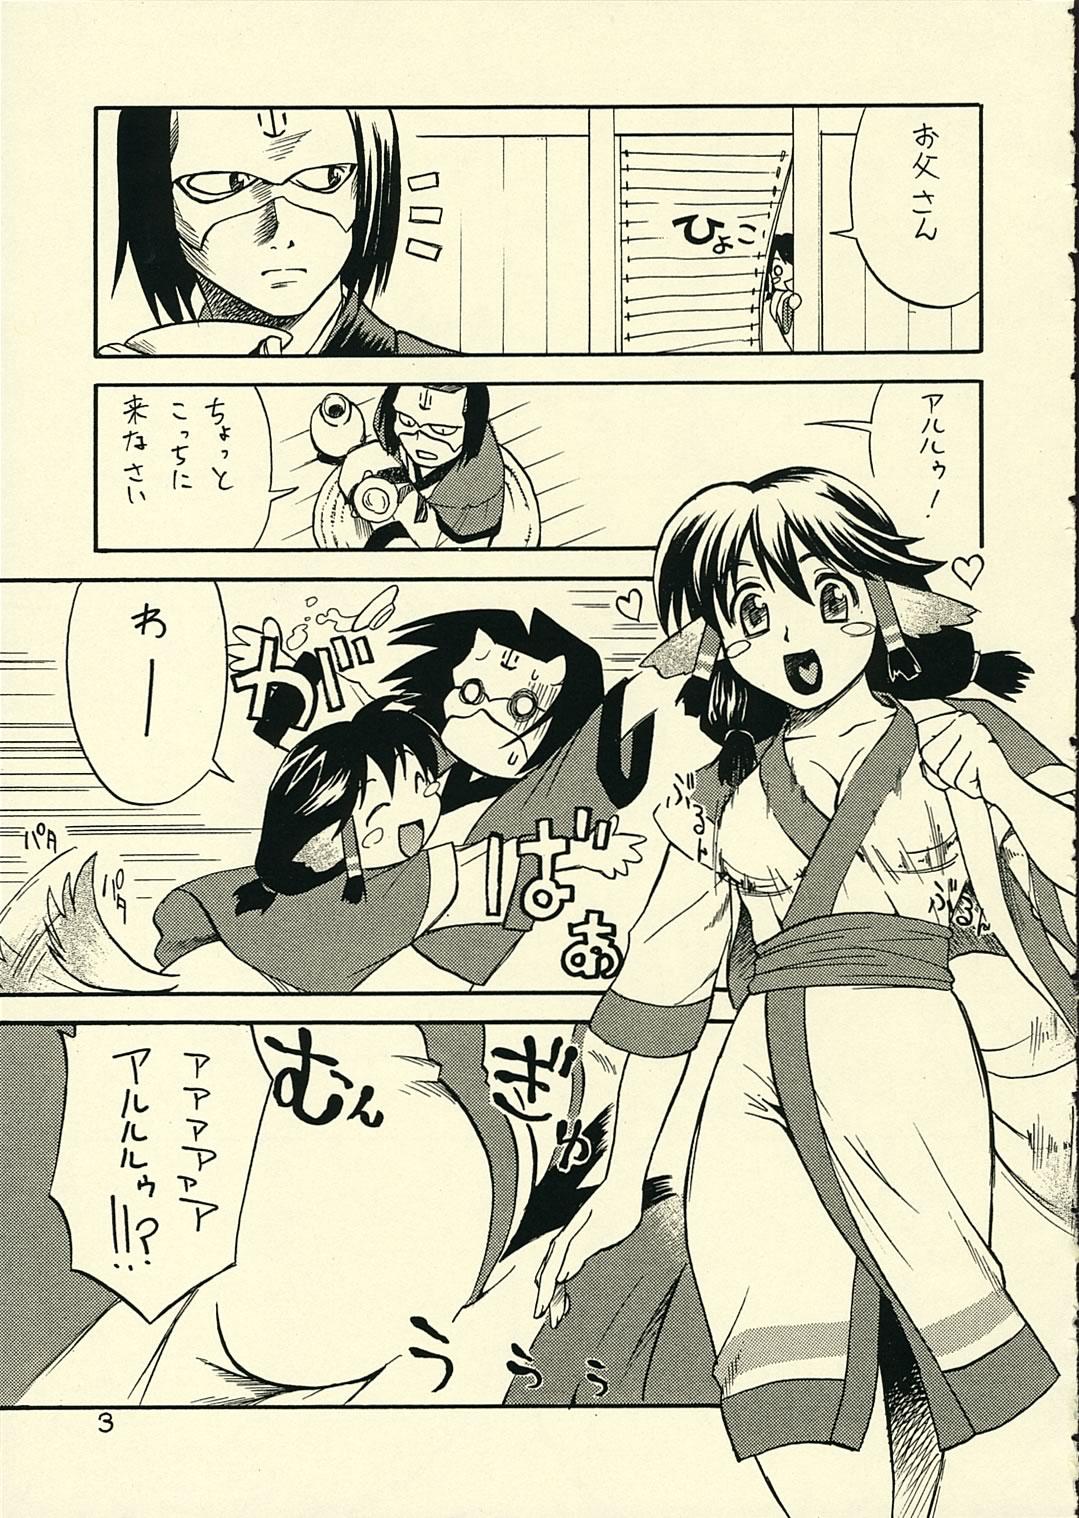 Roughsex Utamono - Utawarerumono Flash - Page 4